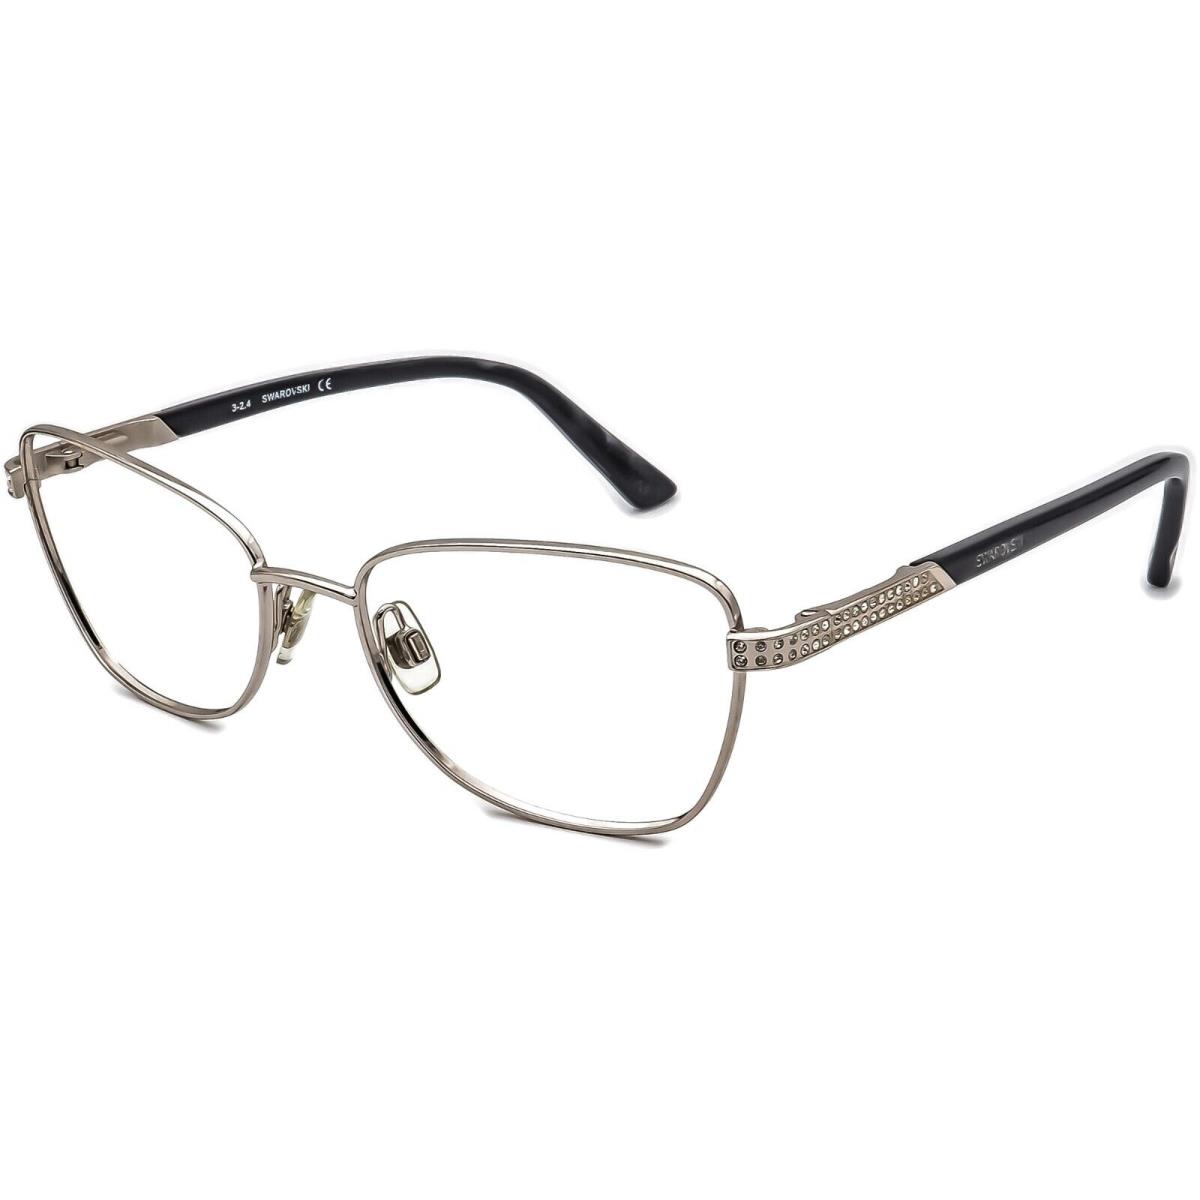 Swarovski eyeglasses Fever - Silver , Silver Frame, Clear Lens